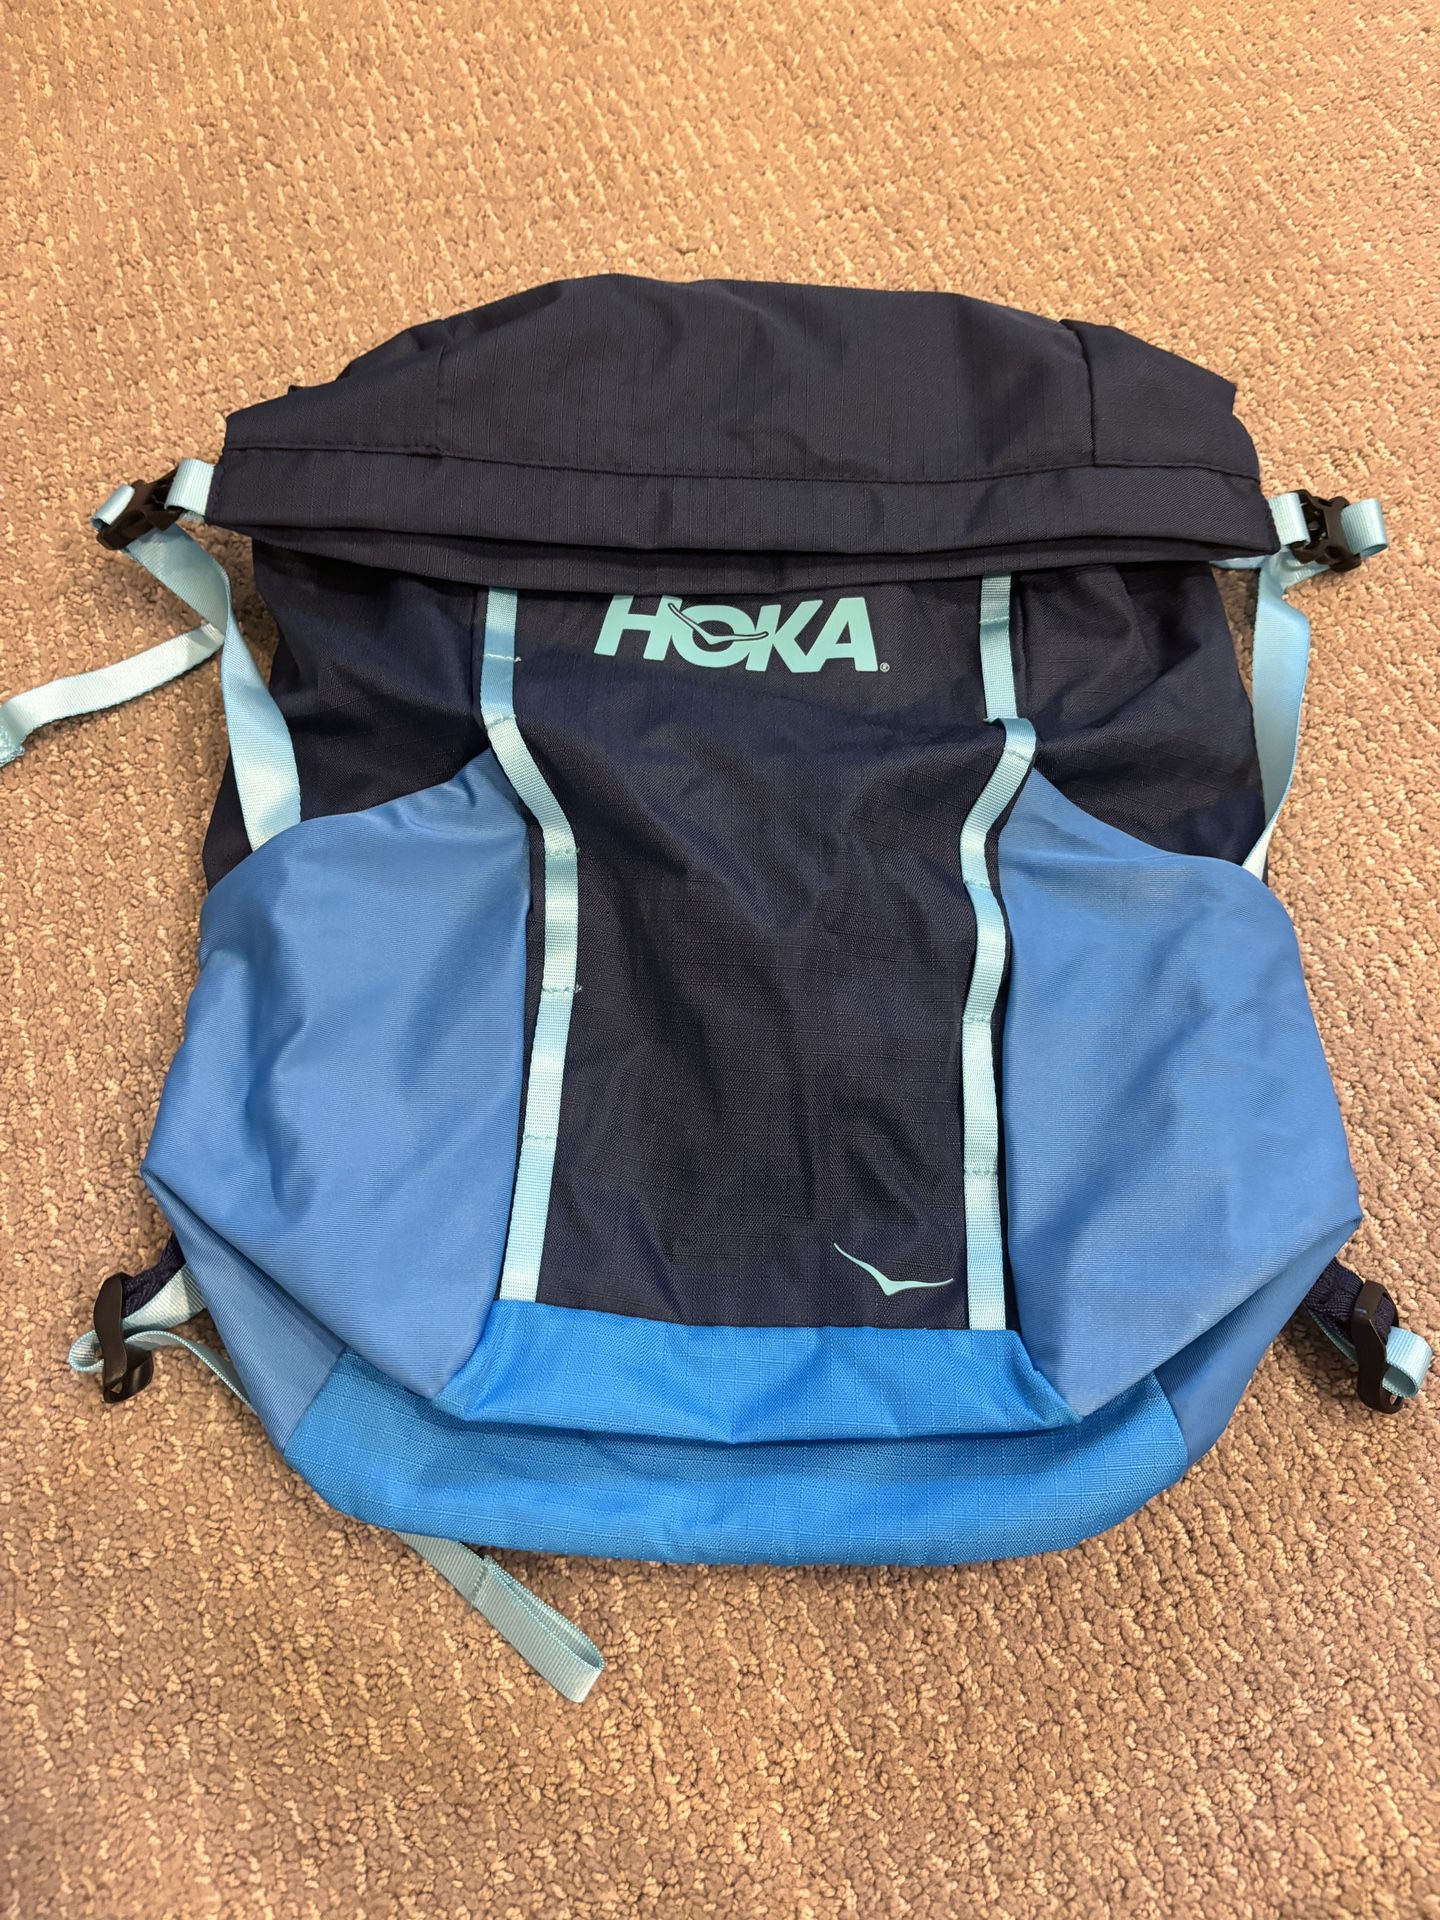 NEW Hoka One One Blue Backpack From Hoka/Footlocker HS XC National Championships